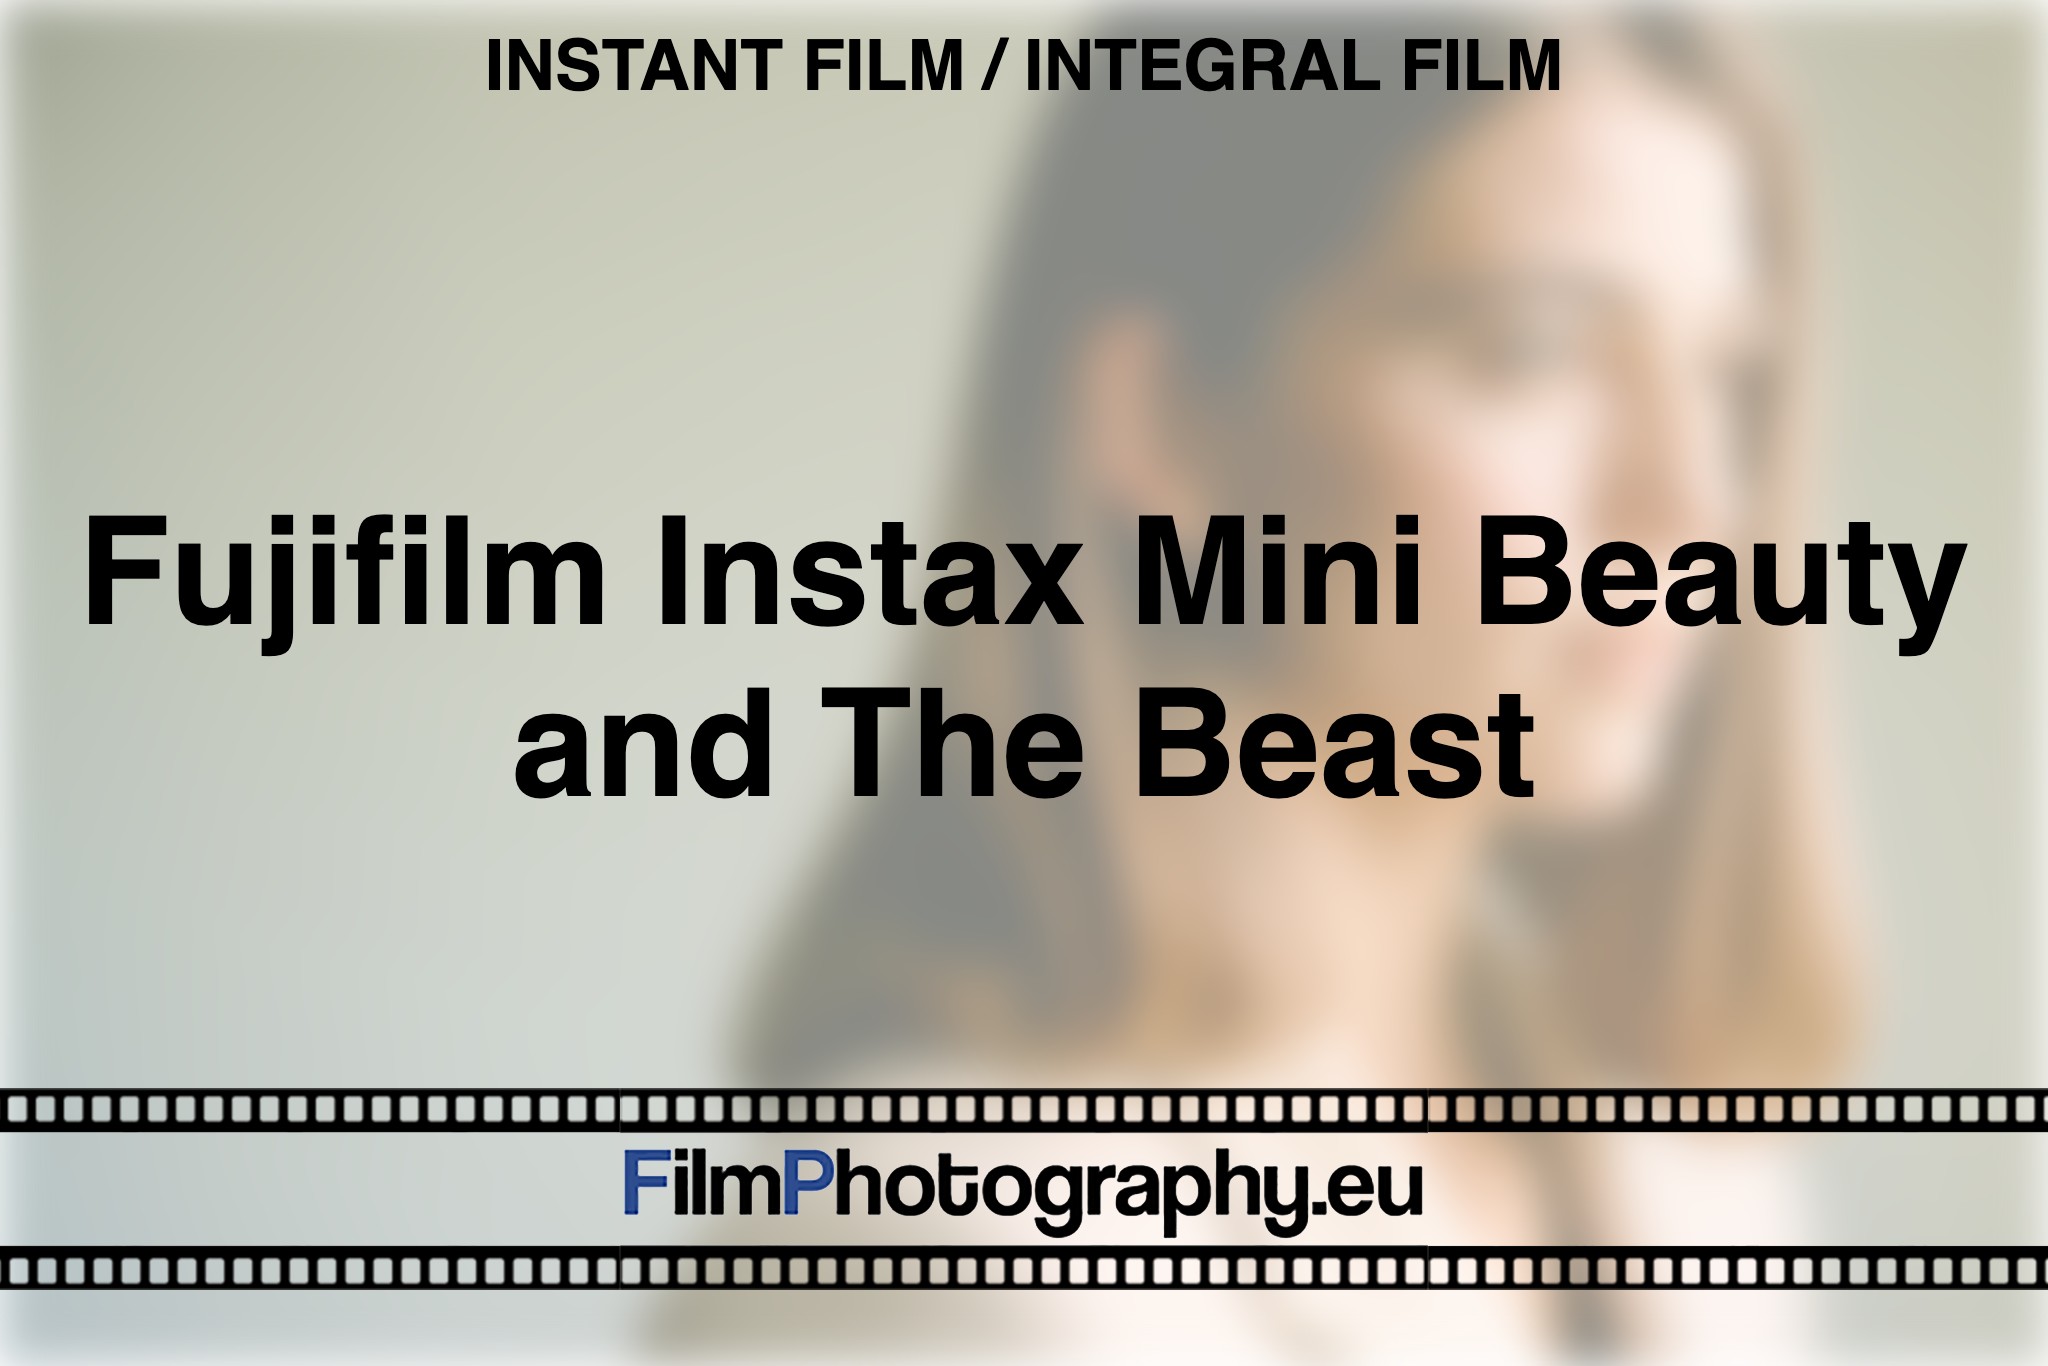 fujifilm-instax-mini-beauty-and-the-beast-instant-film-integral-film-bnv